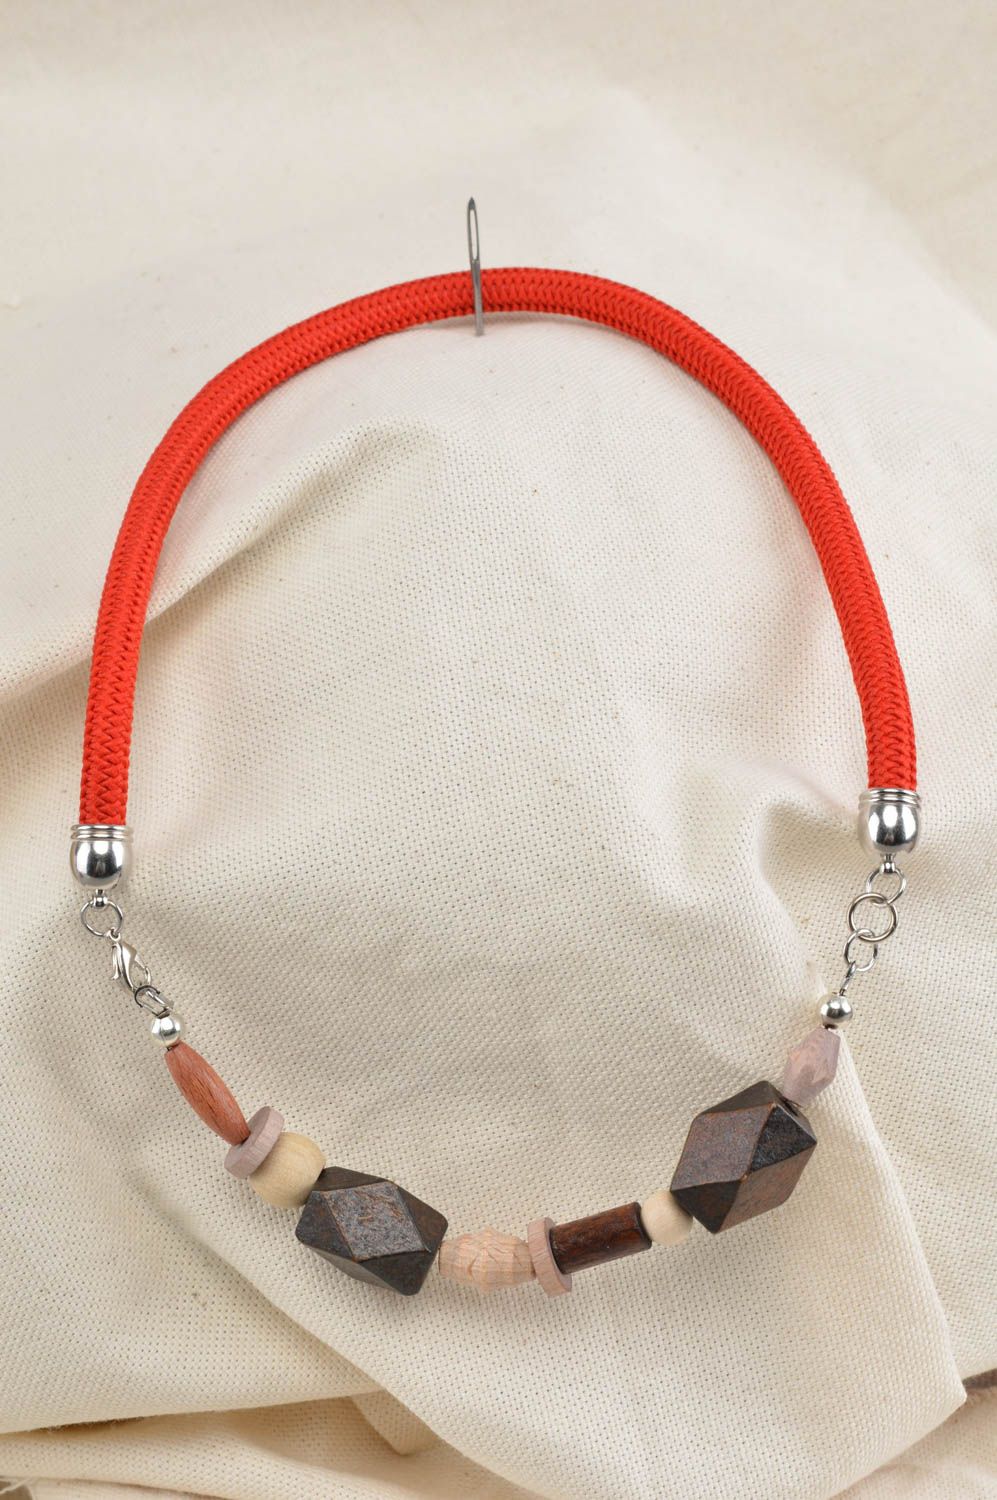 Handmade designer jewelry necklace made of wooden beads stylish accessory photo 1